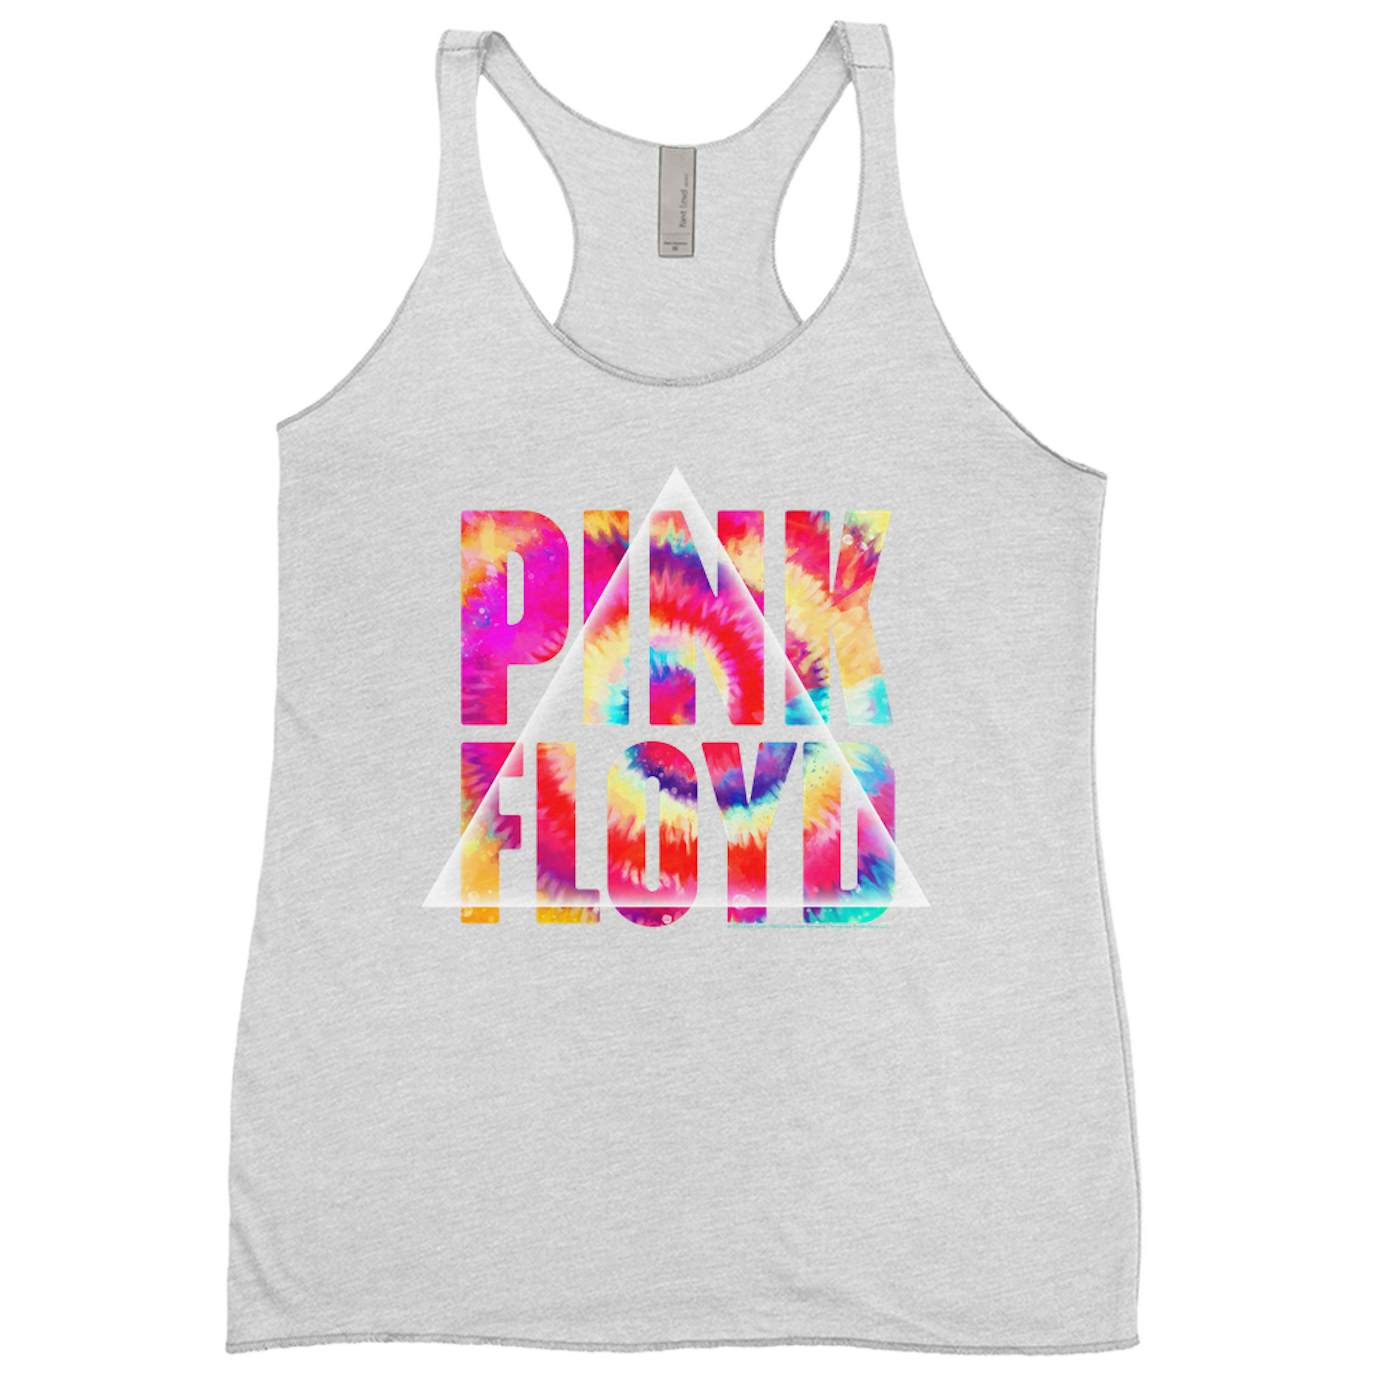 Pink Floyd Ladies' Tank Top | Tie Dye Prism Logo Pink Floyd Shirt (Merchbar Exclusive)